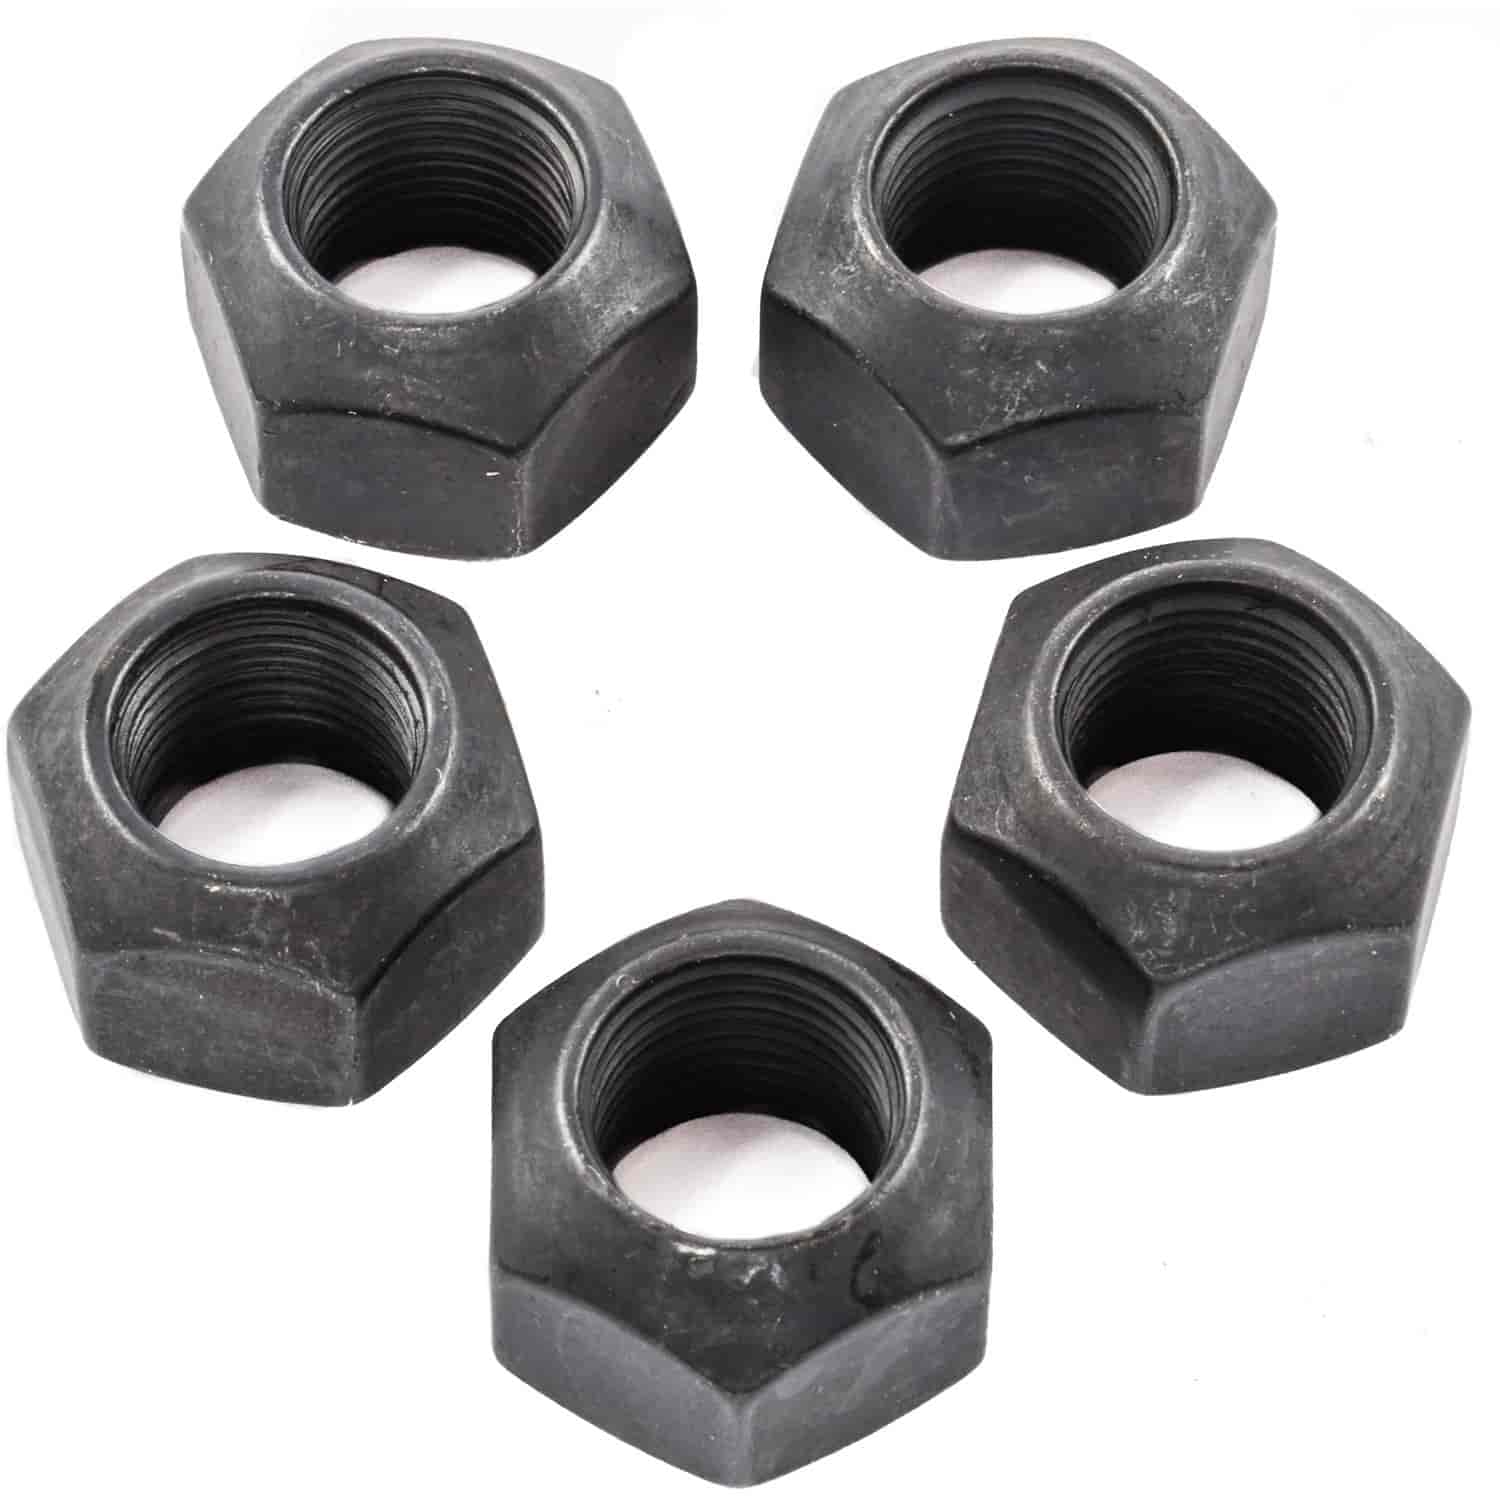 Single-Sided Heat-Treated Steel Lug Nuts [5/8 in.-18 Thread, 1 in. Hex] Set of 5